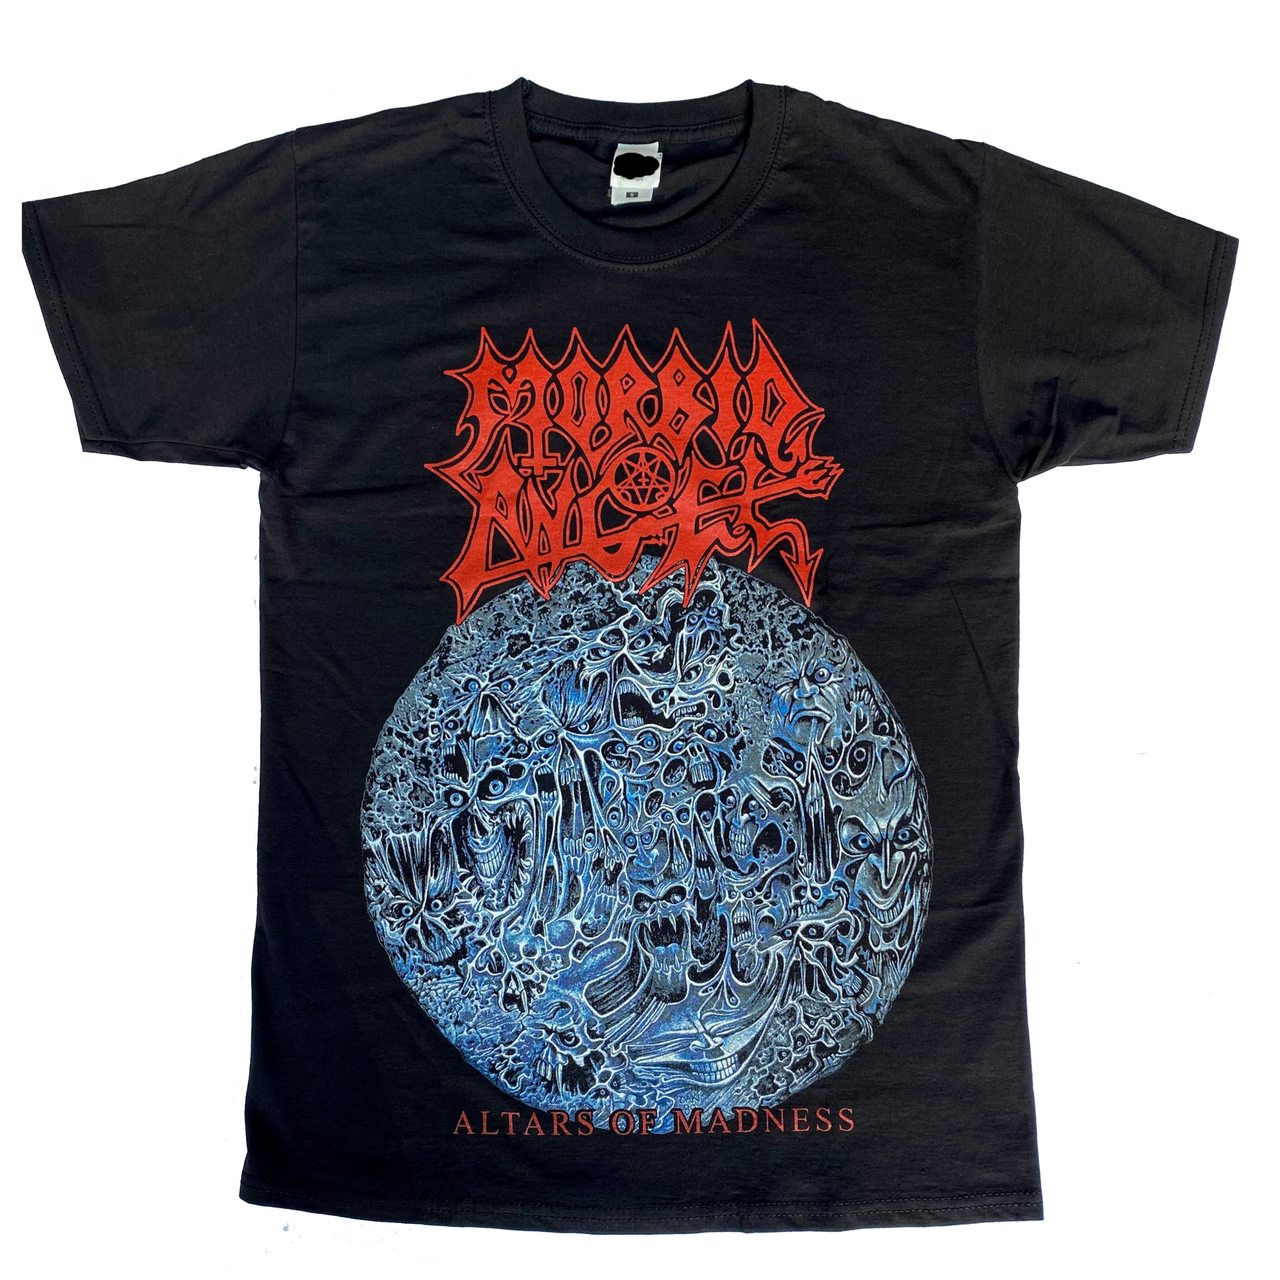 Morbid Angel Altars of Madness T-Shirt